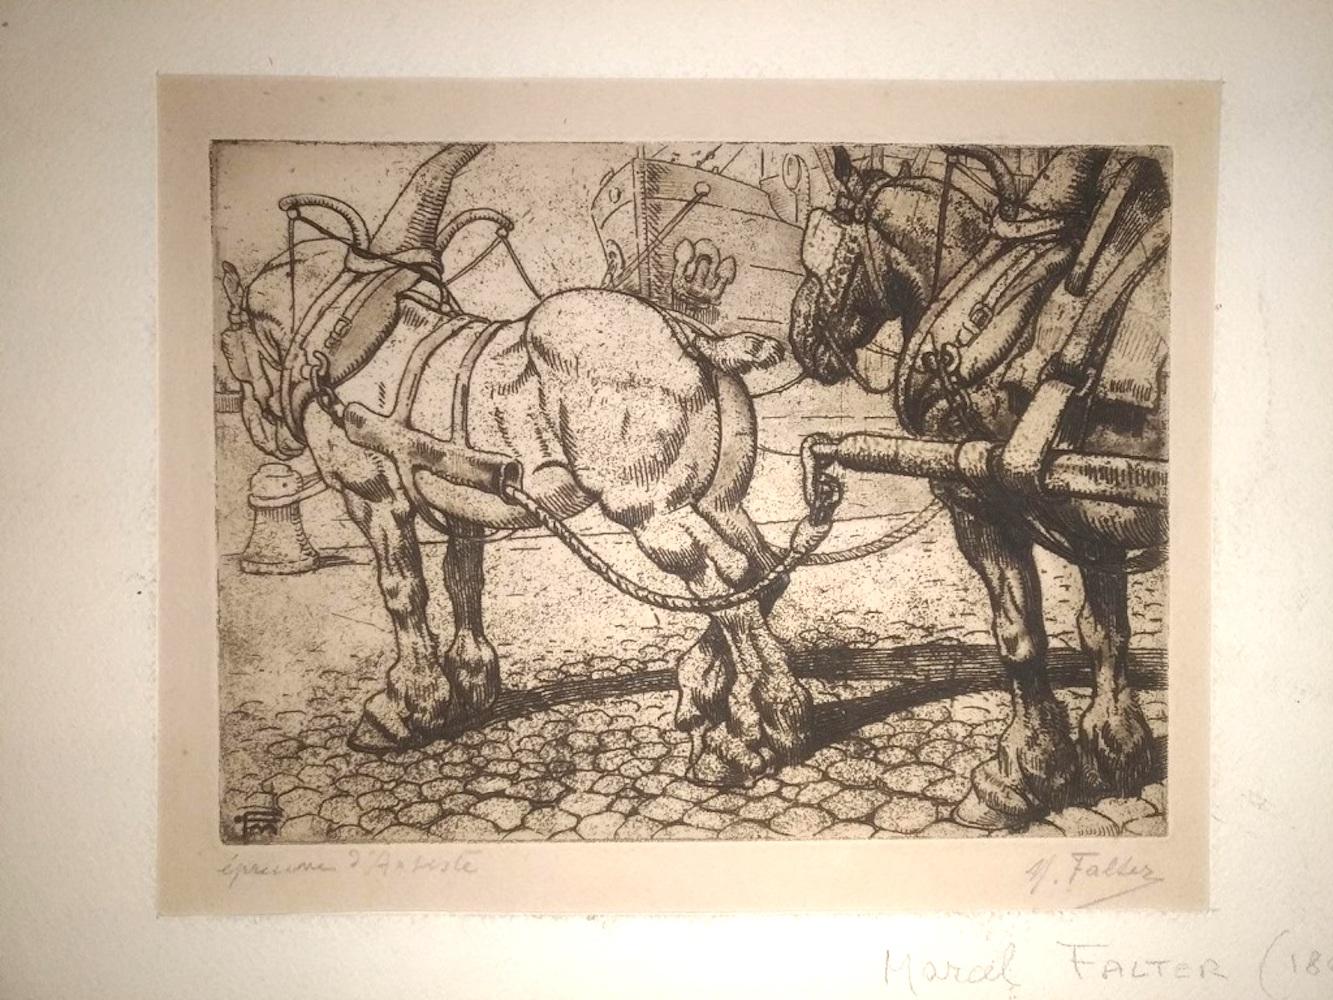 Marcel Falter Figurative Print - The Plow - Original Etching by M. Falter - 1920 ca.